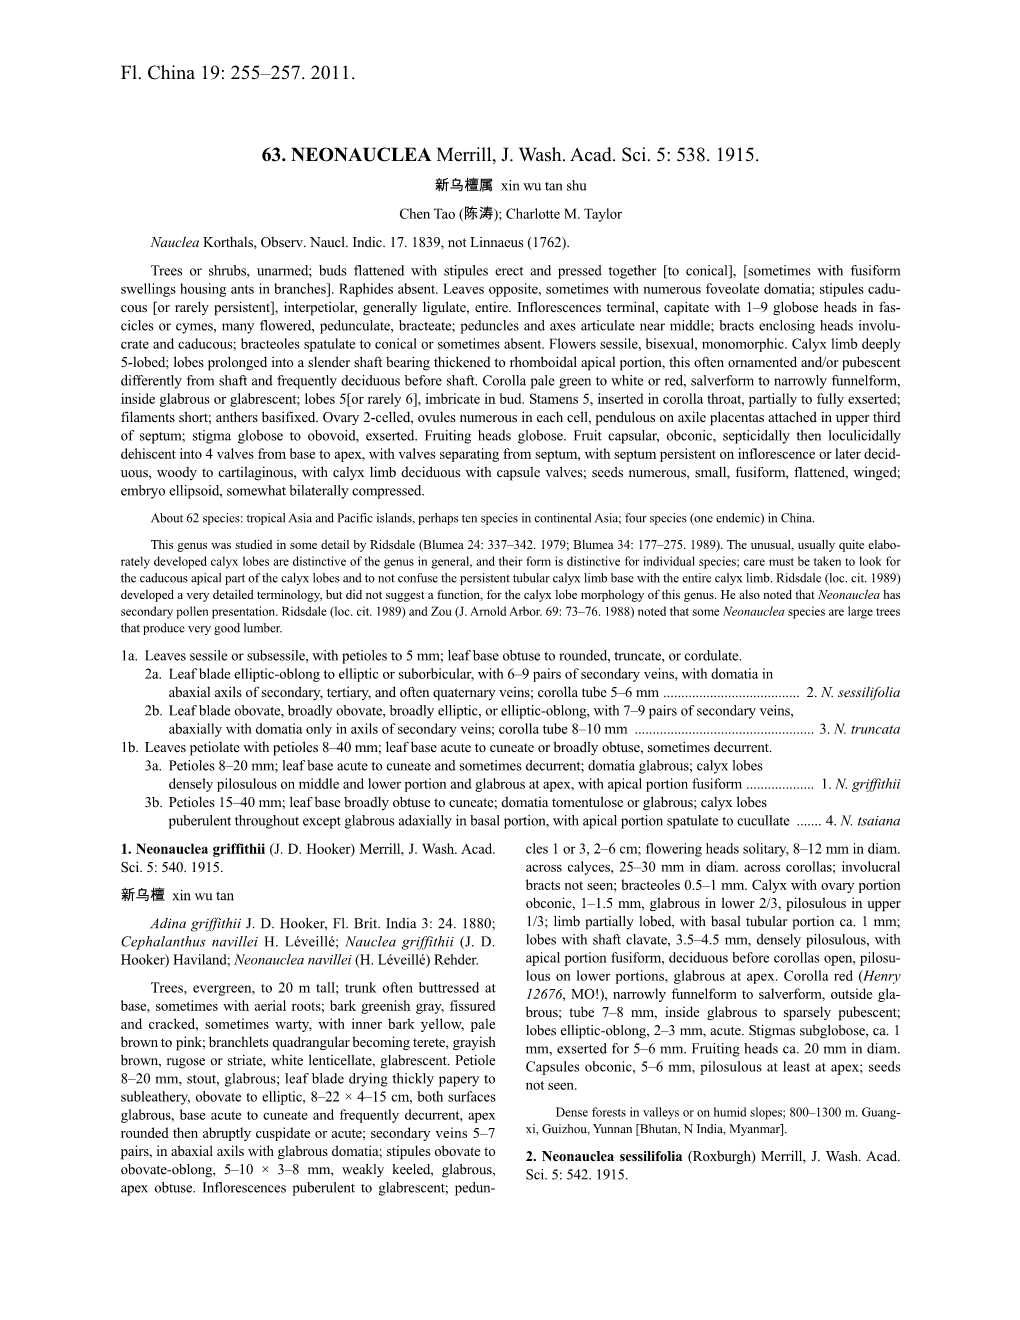 Neonauclea (PDF)